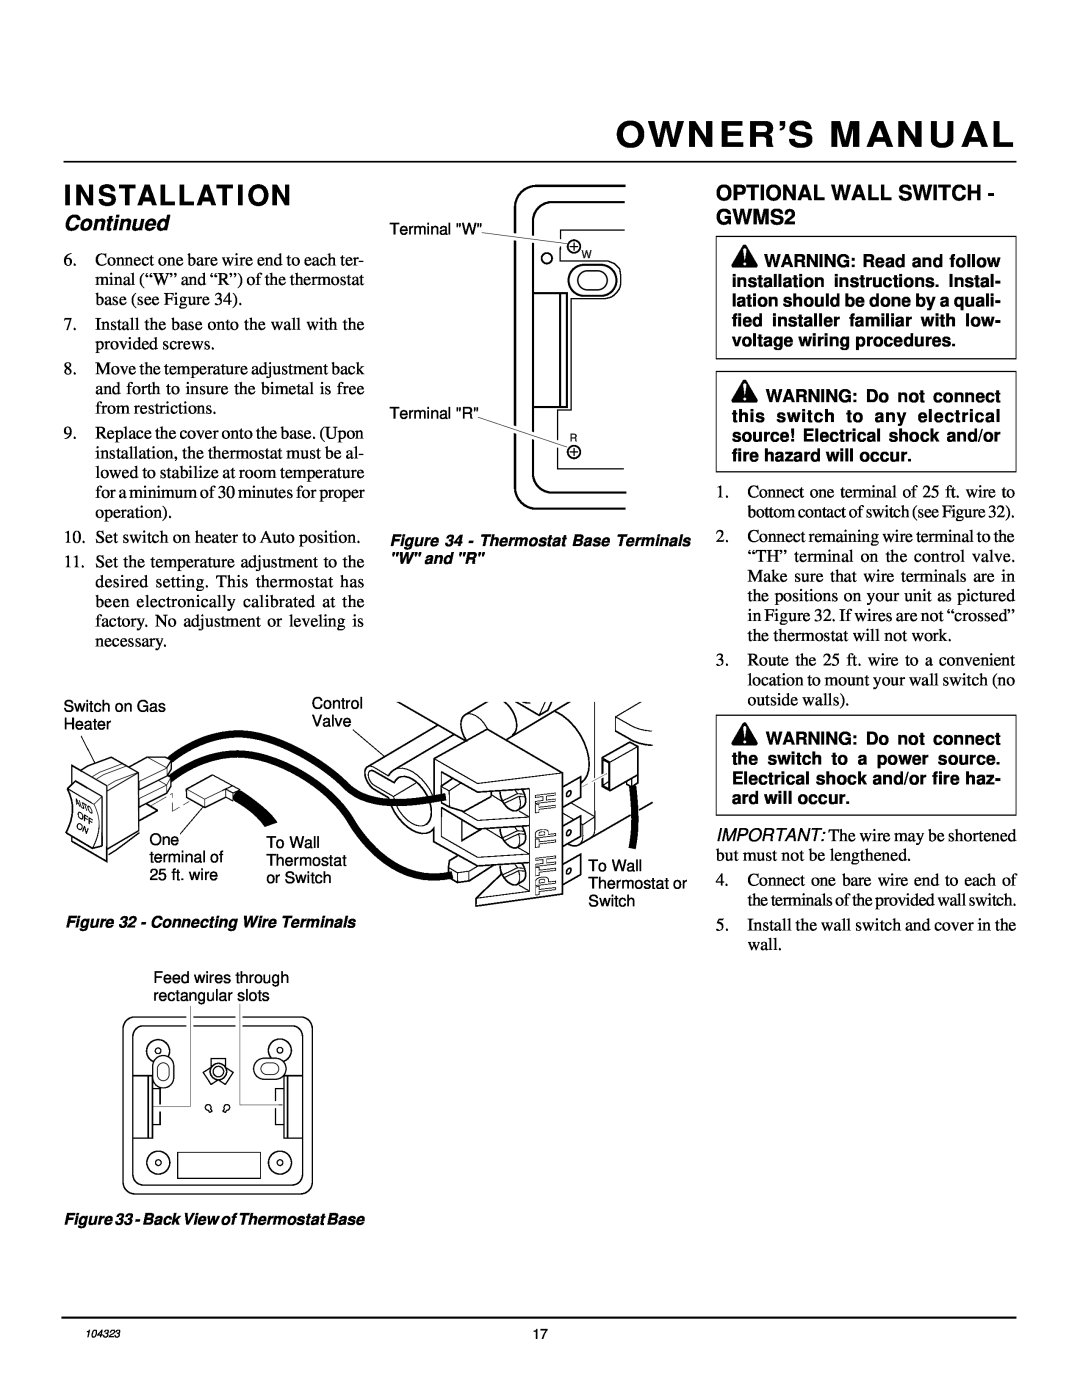 Desa VMH26PR installation manual OPTIONAL WALL SWITCH - GWMS2, Installation, Continued 